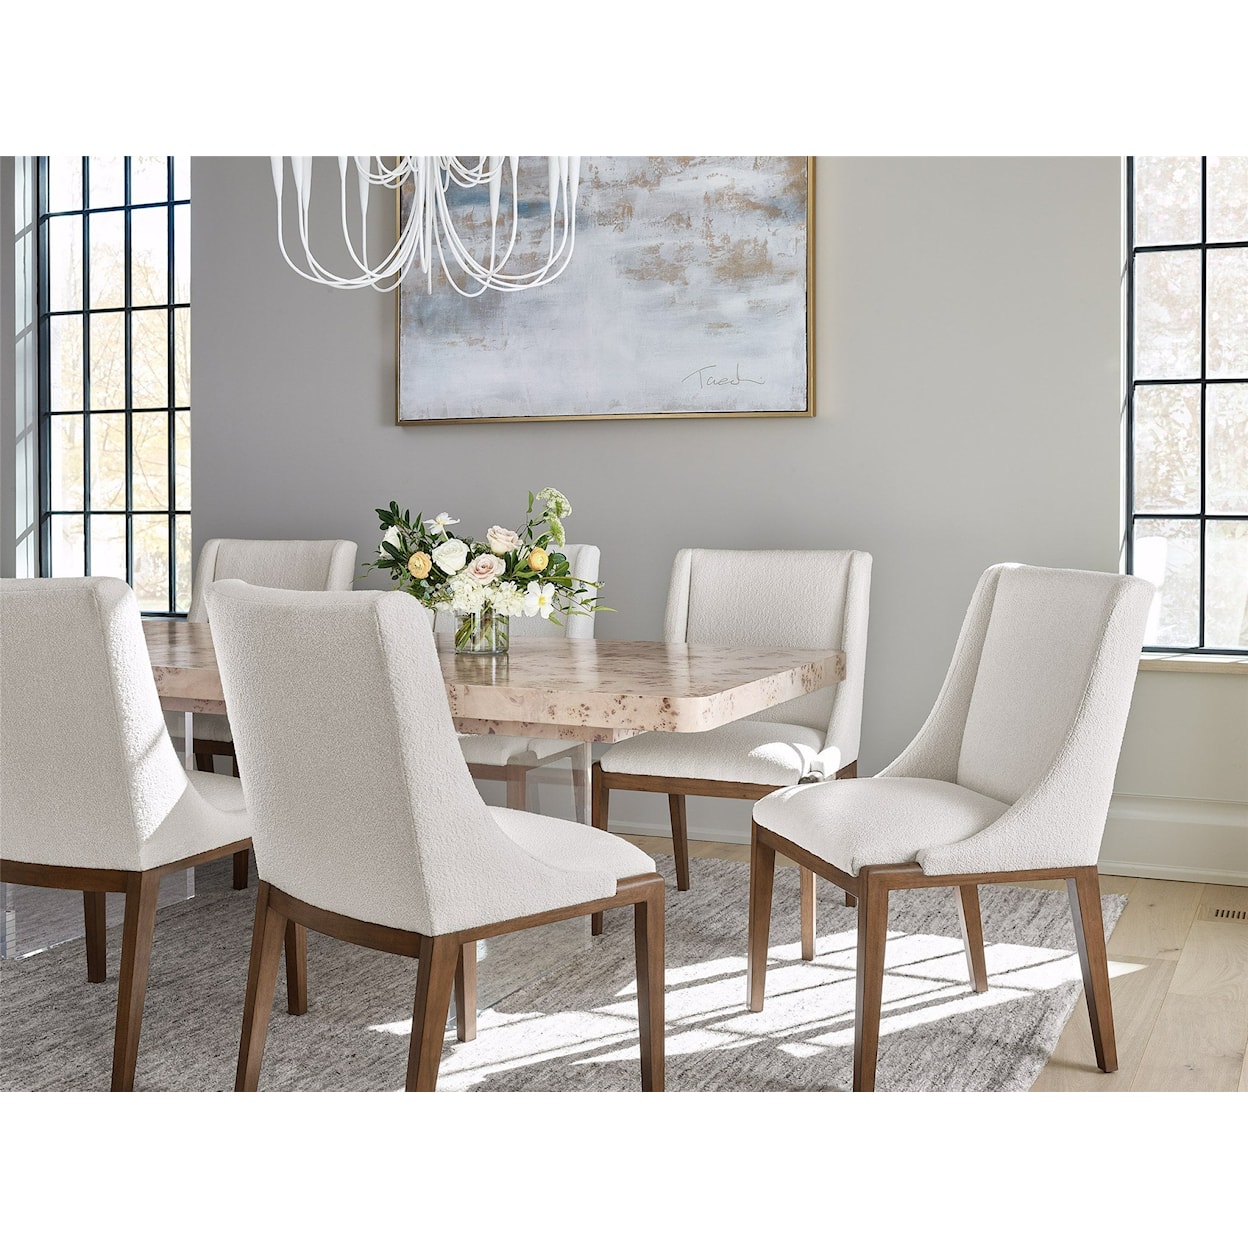 Universal Tranquility - Miranda Kerr Home Dining Table